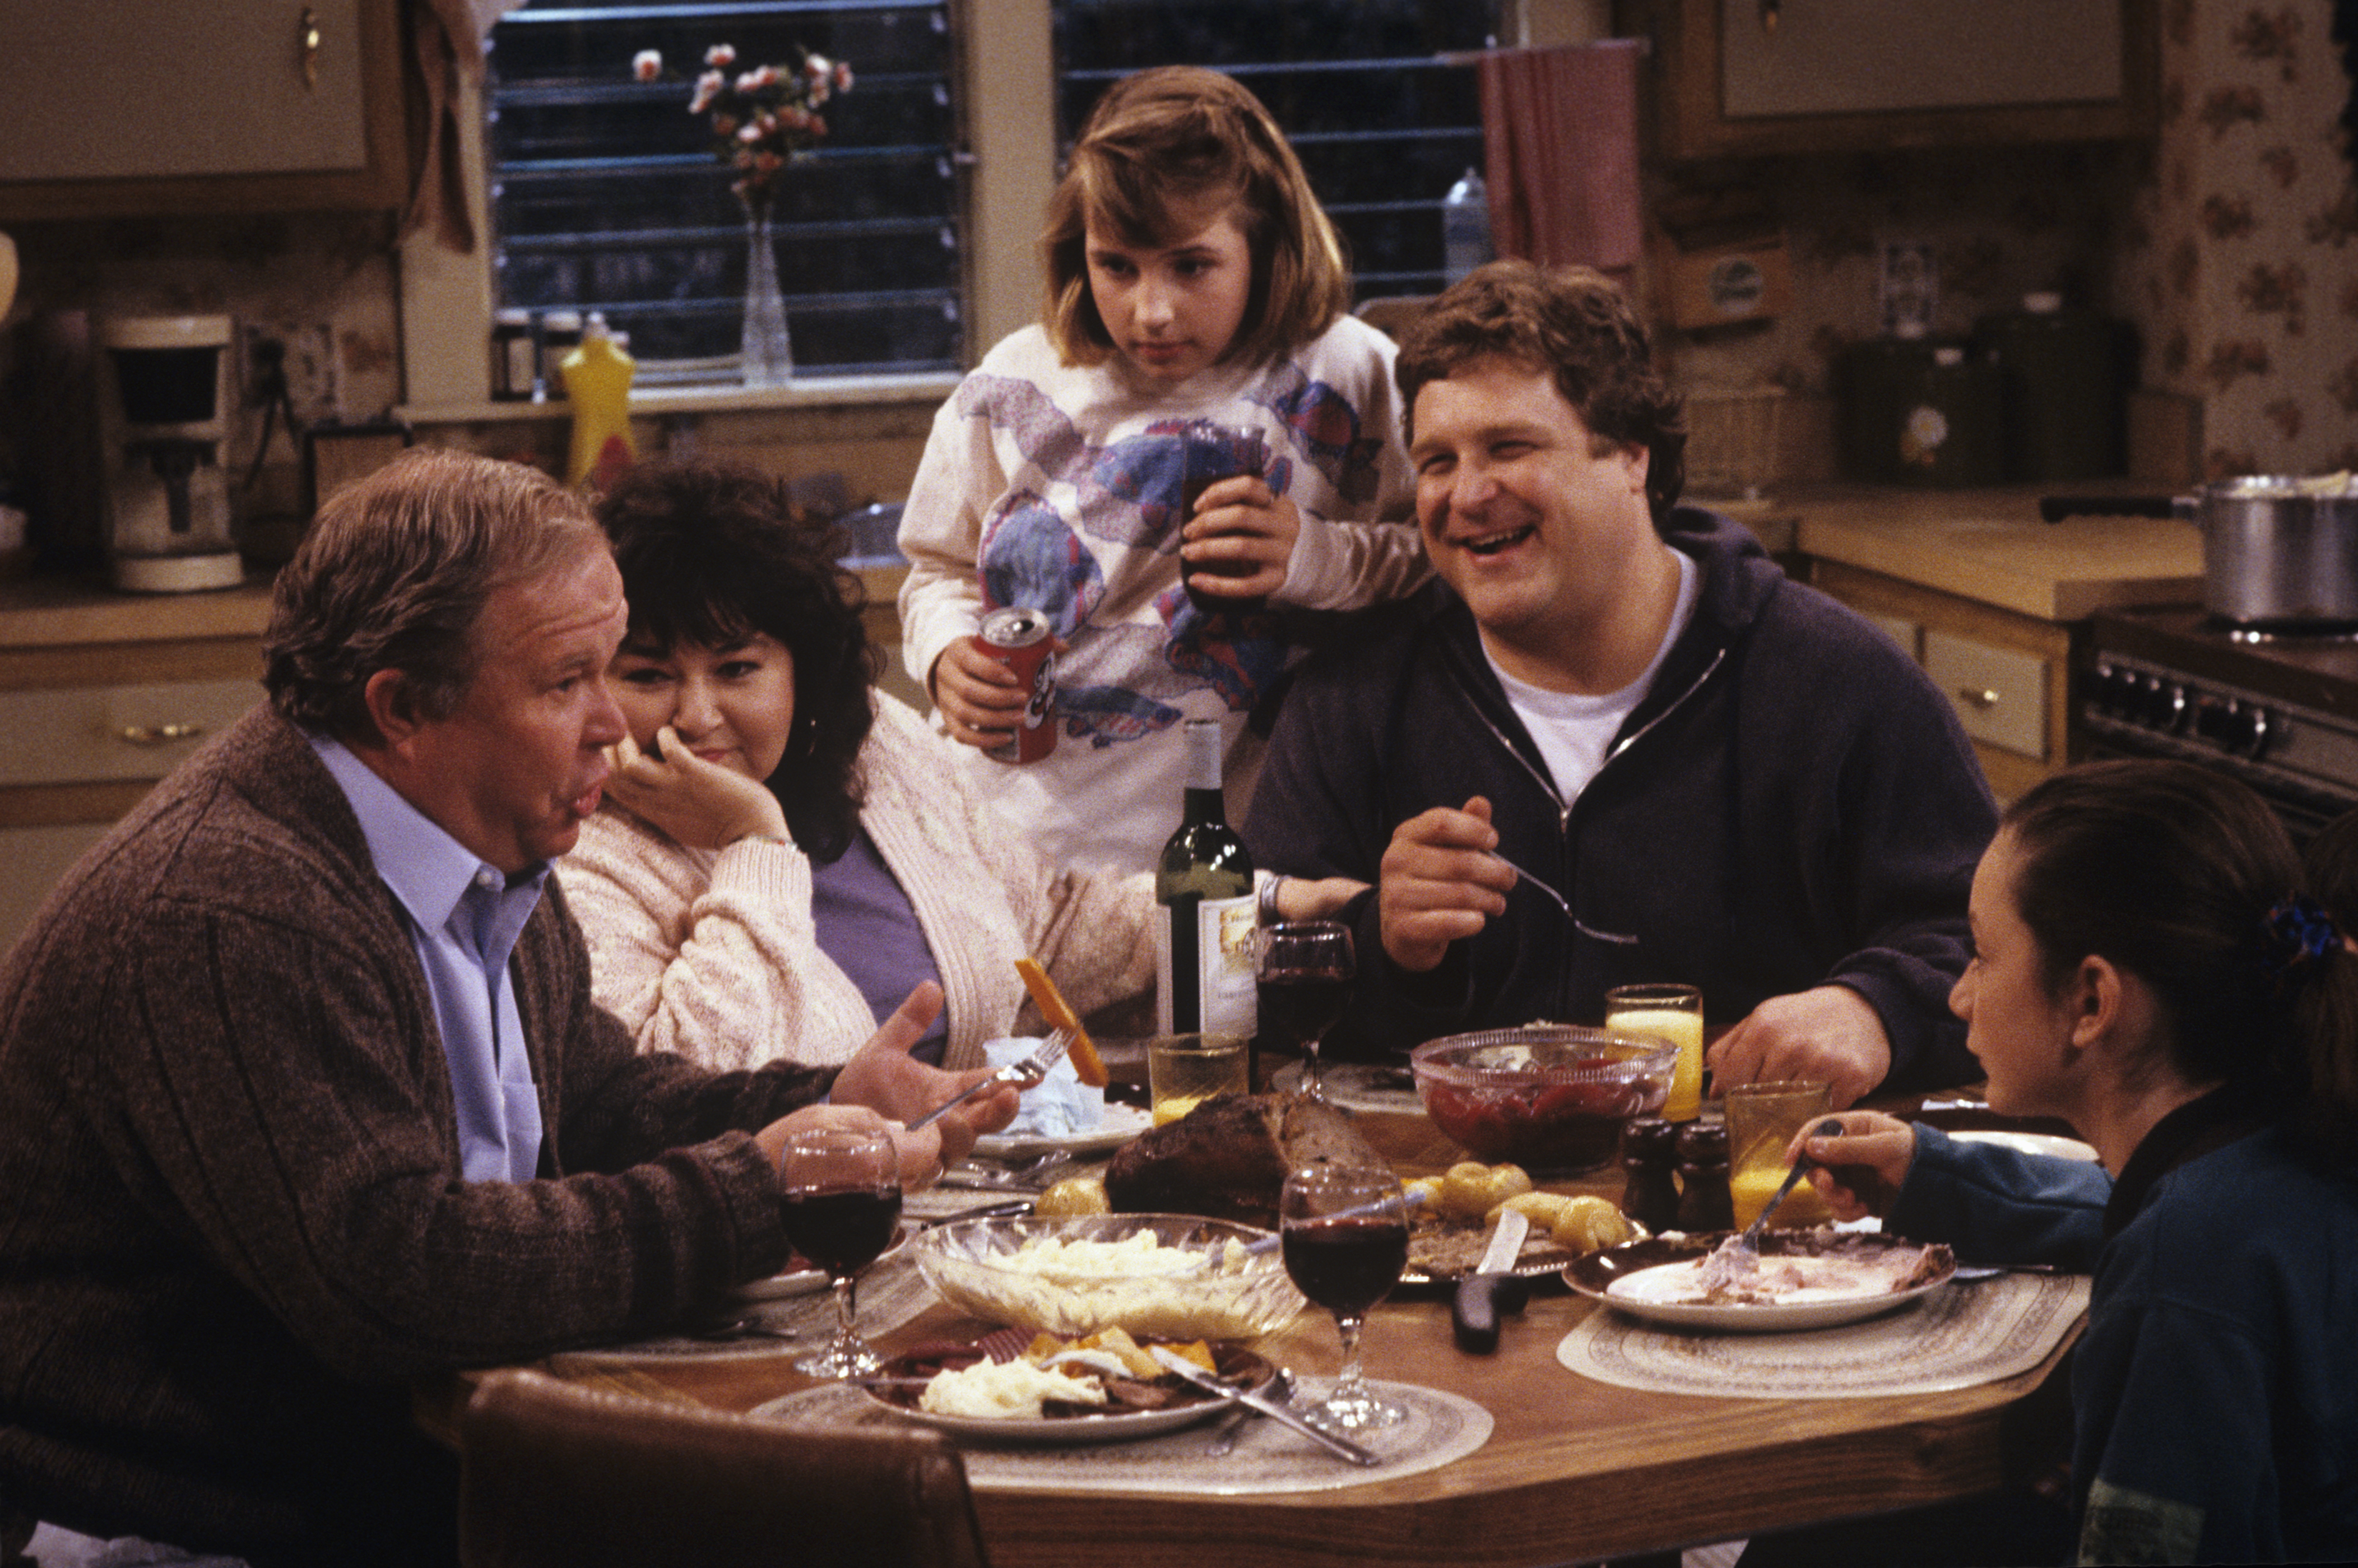 Still of John Goodman, Ned Beatty, Roseanne Barr, Sara Gilbert and Alicia Goranson in Roseanne (1988)